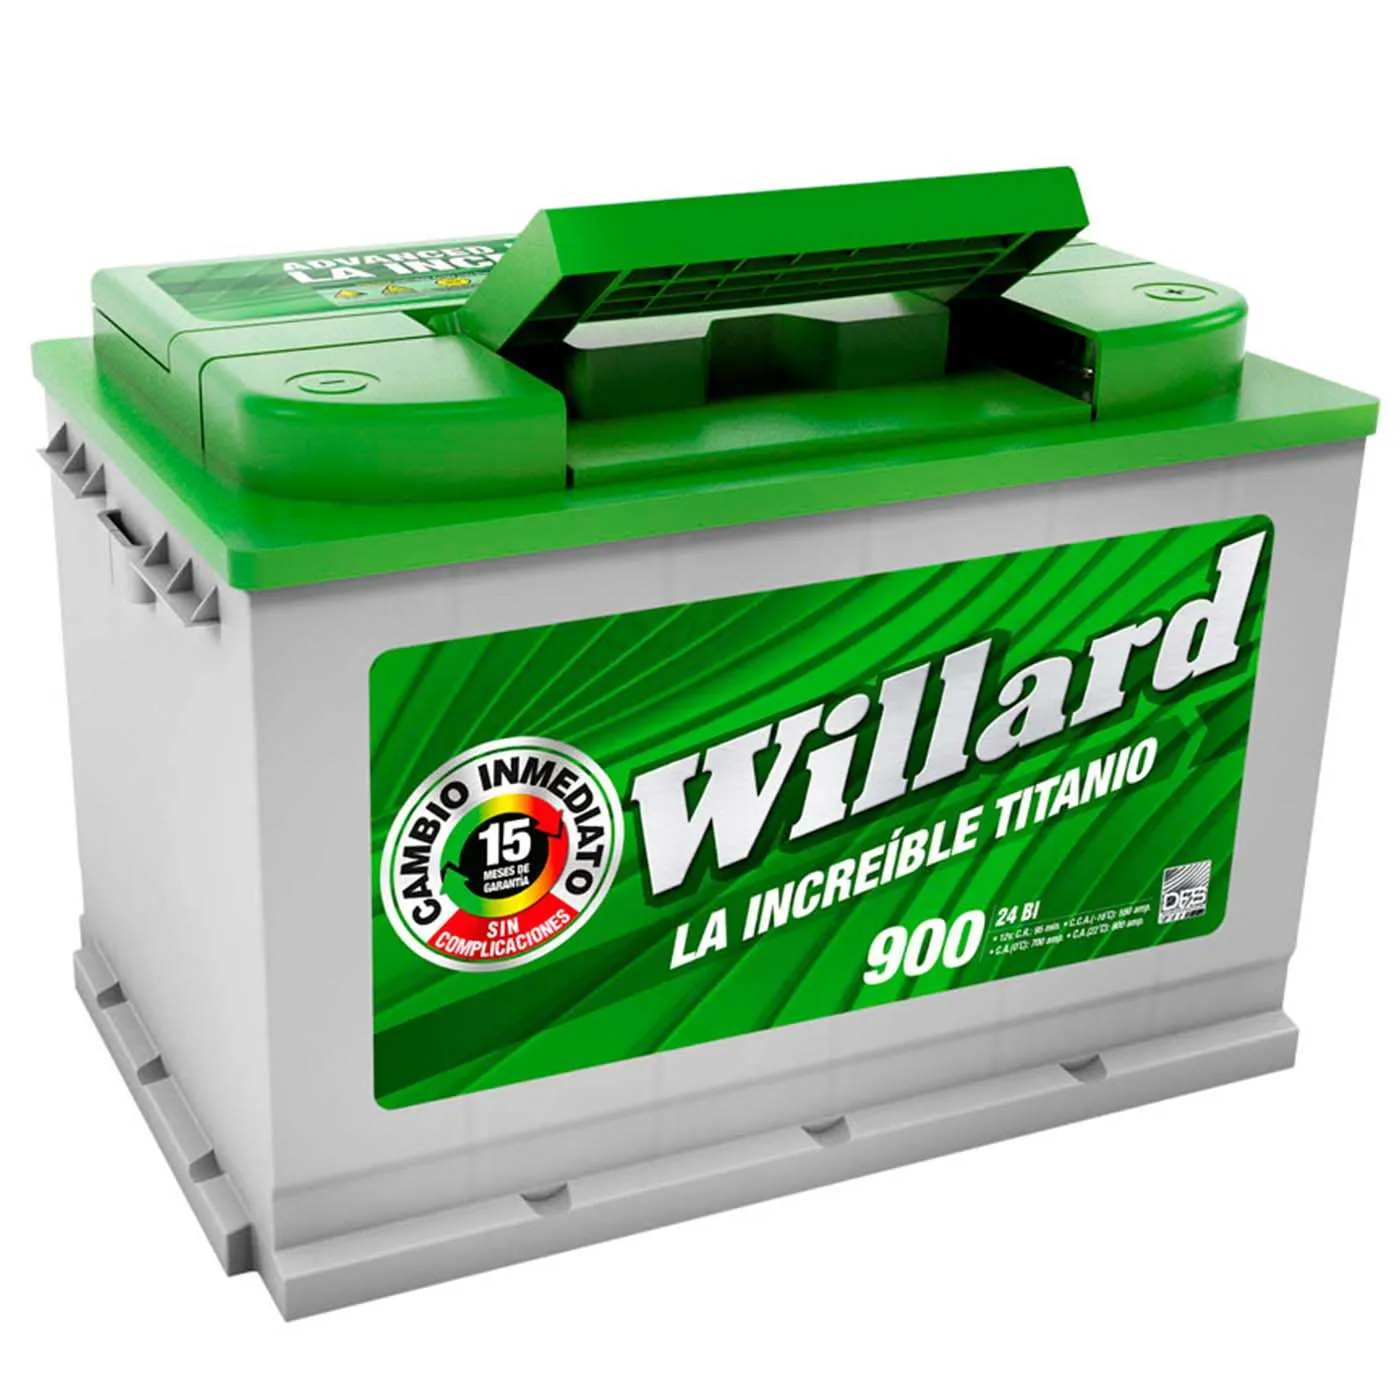 Batería Carro WILLARD Titanio 24BI-900